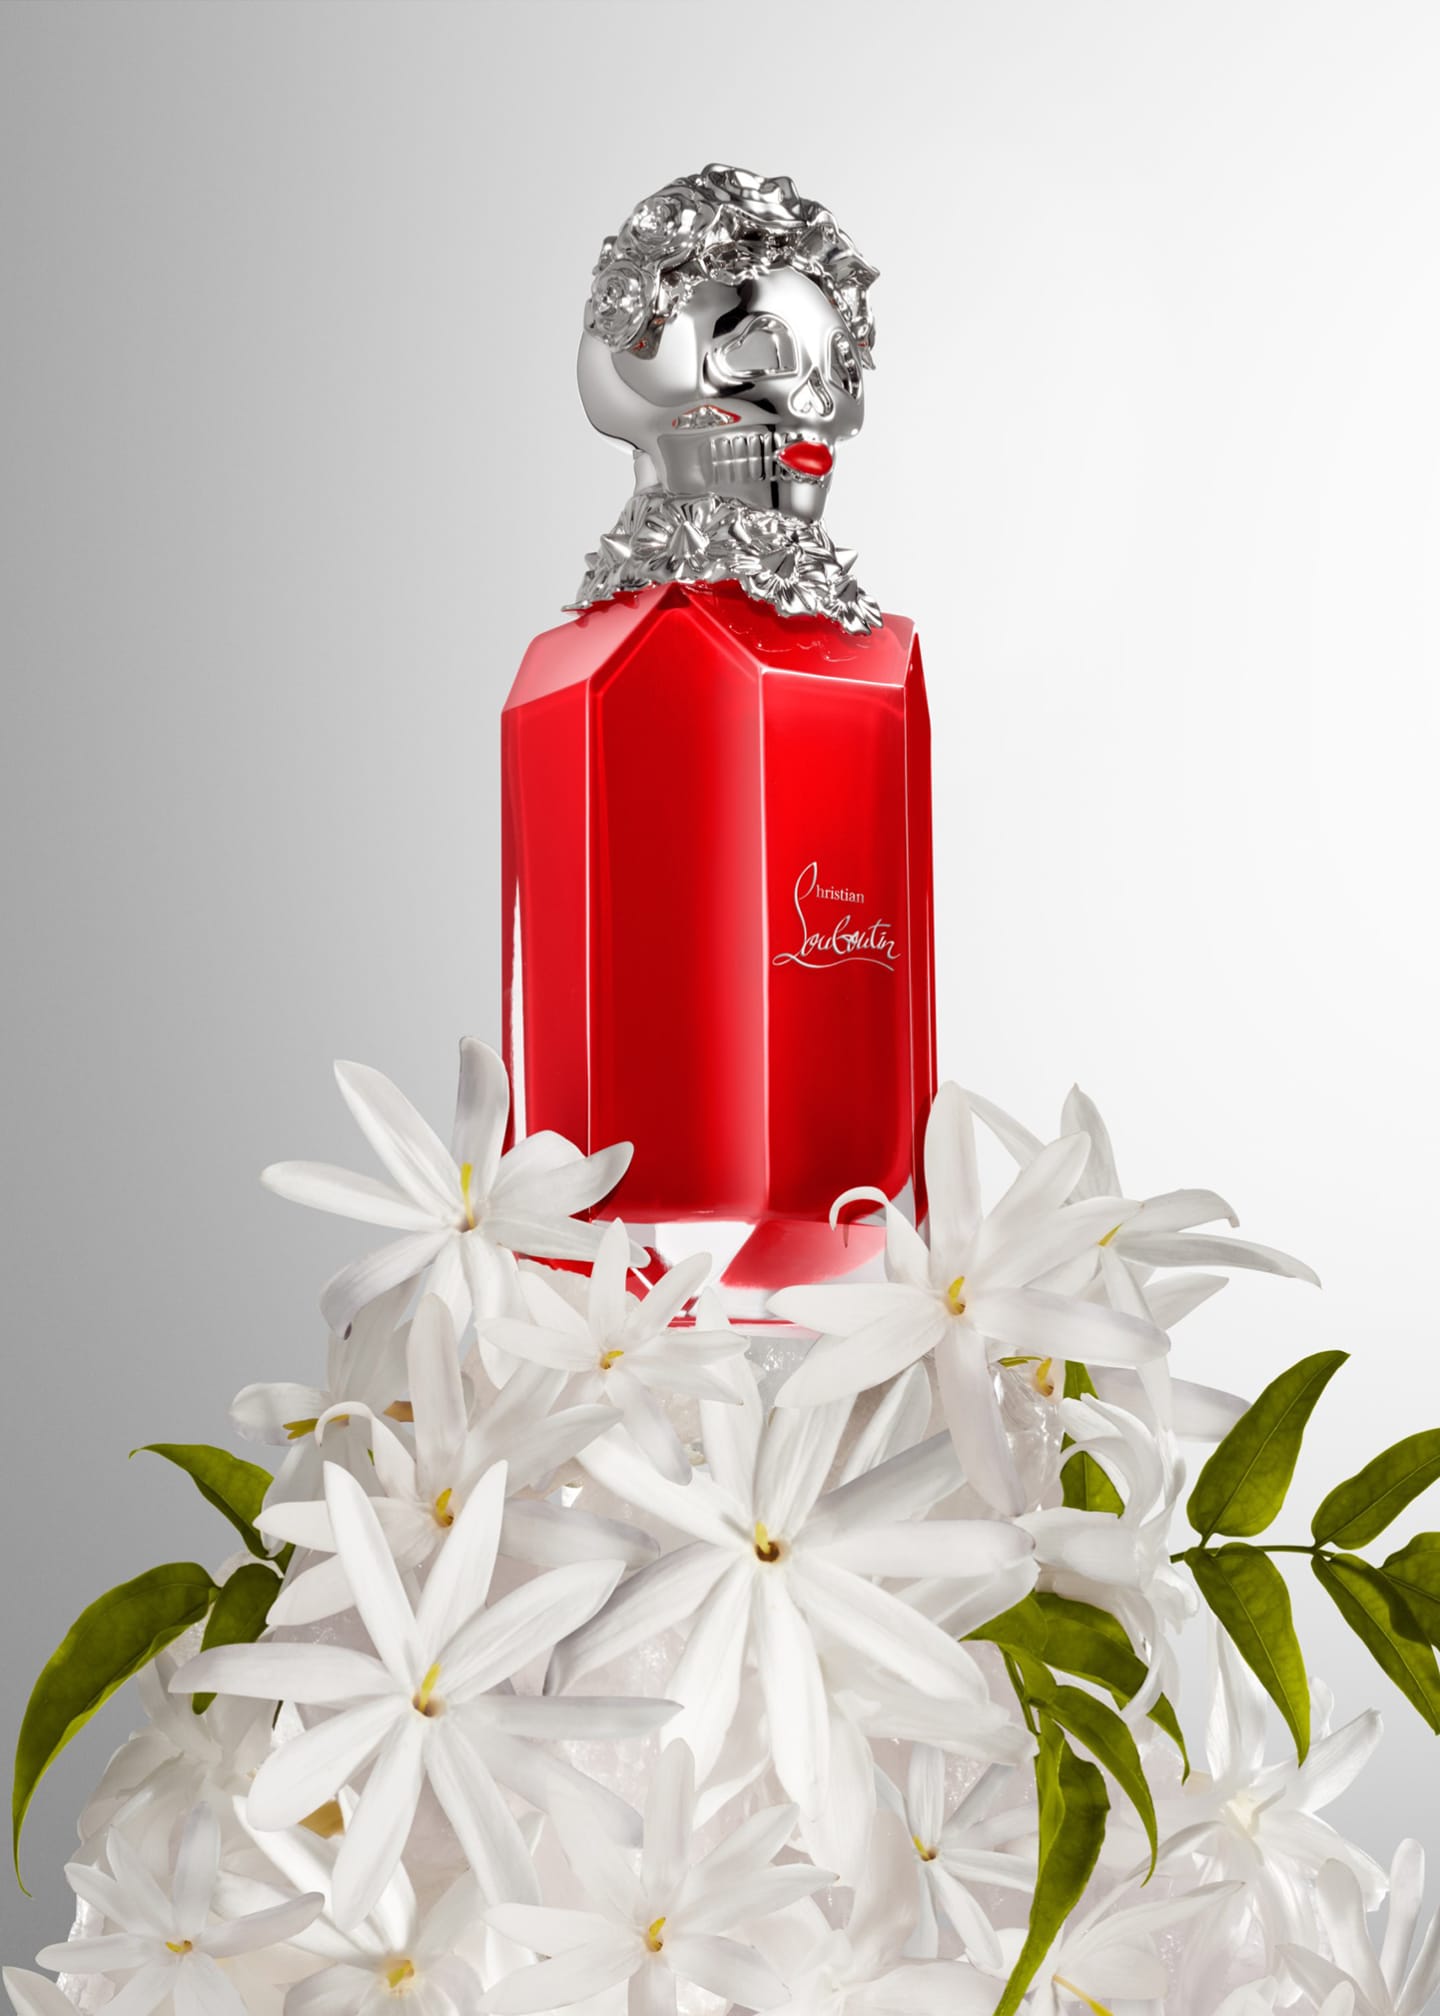 Christian Louboutin, Other, Christian Louboutin Perfume Gift Set